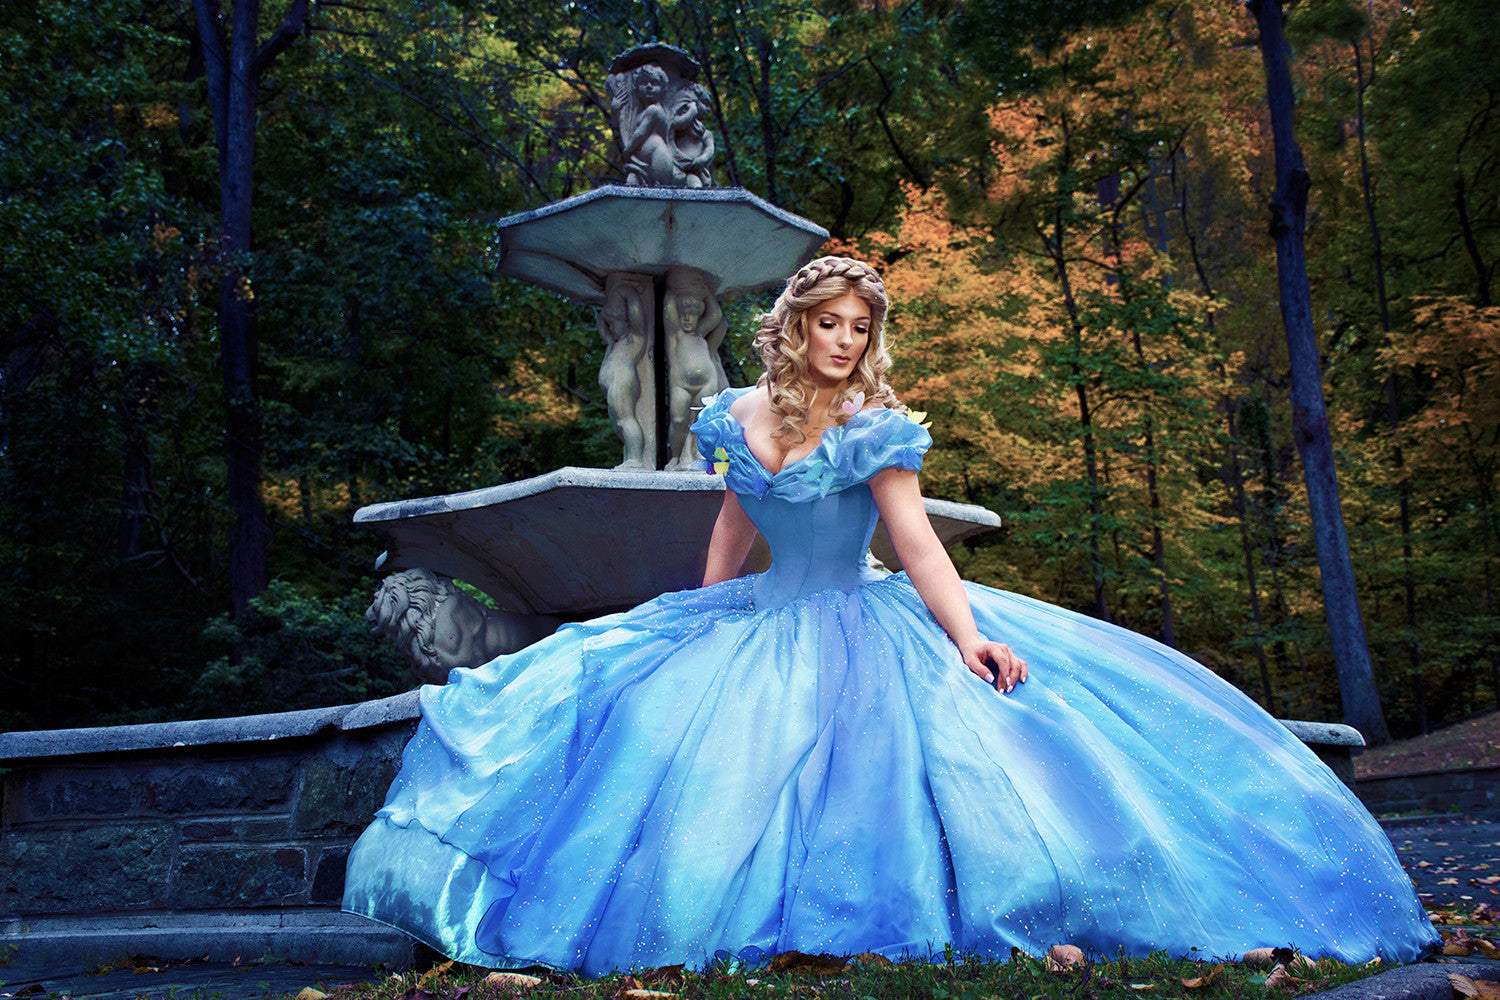 Disney's Cinderella Wig Tutorial by J Hart Design